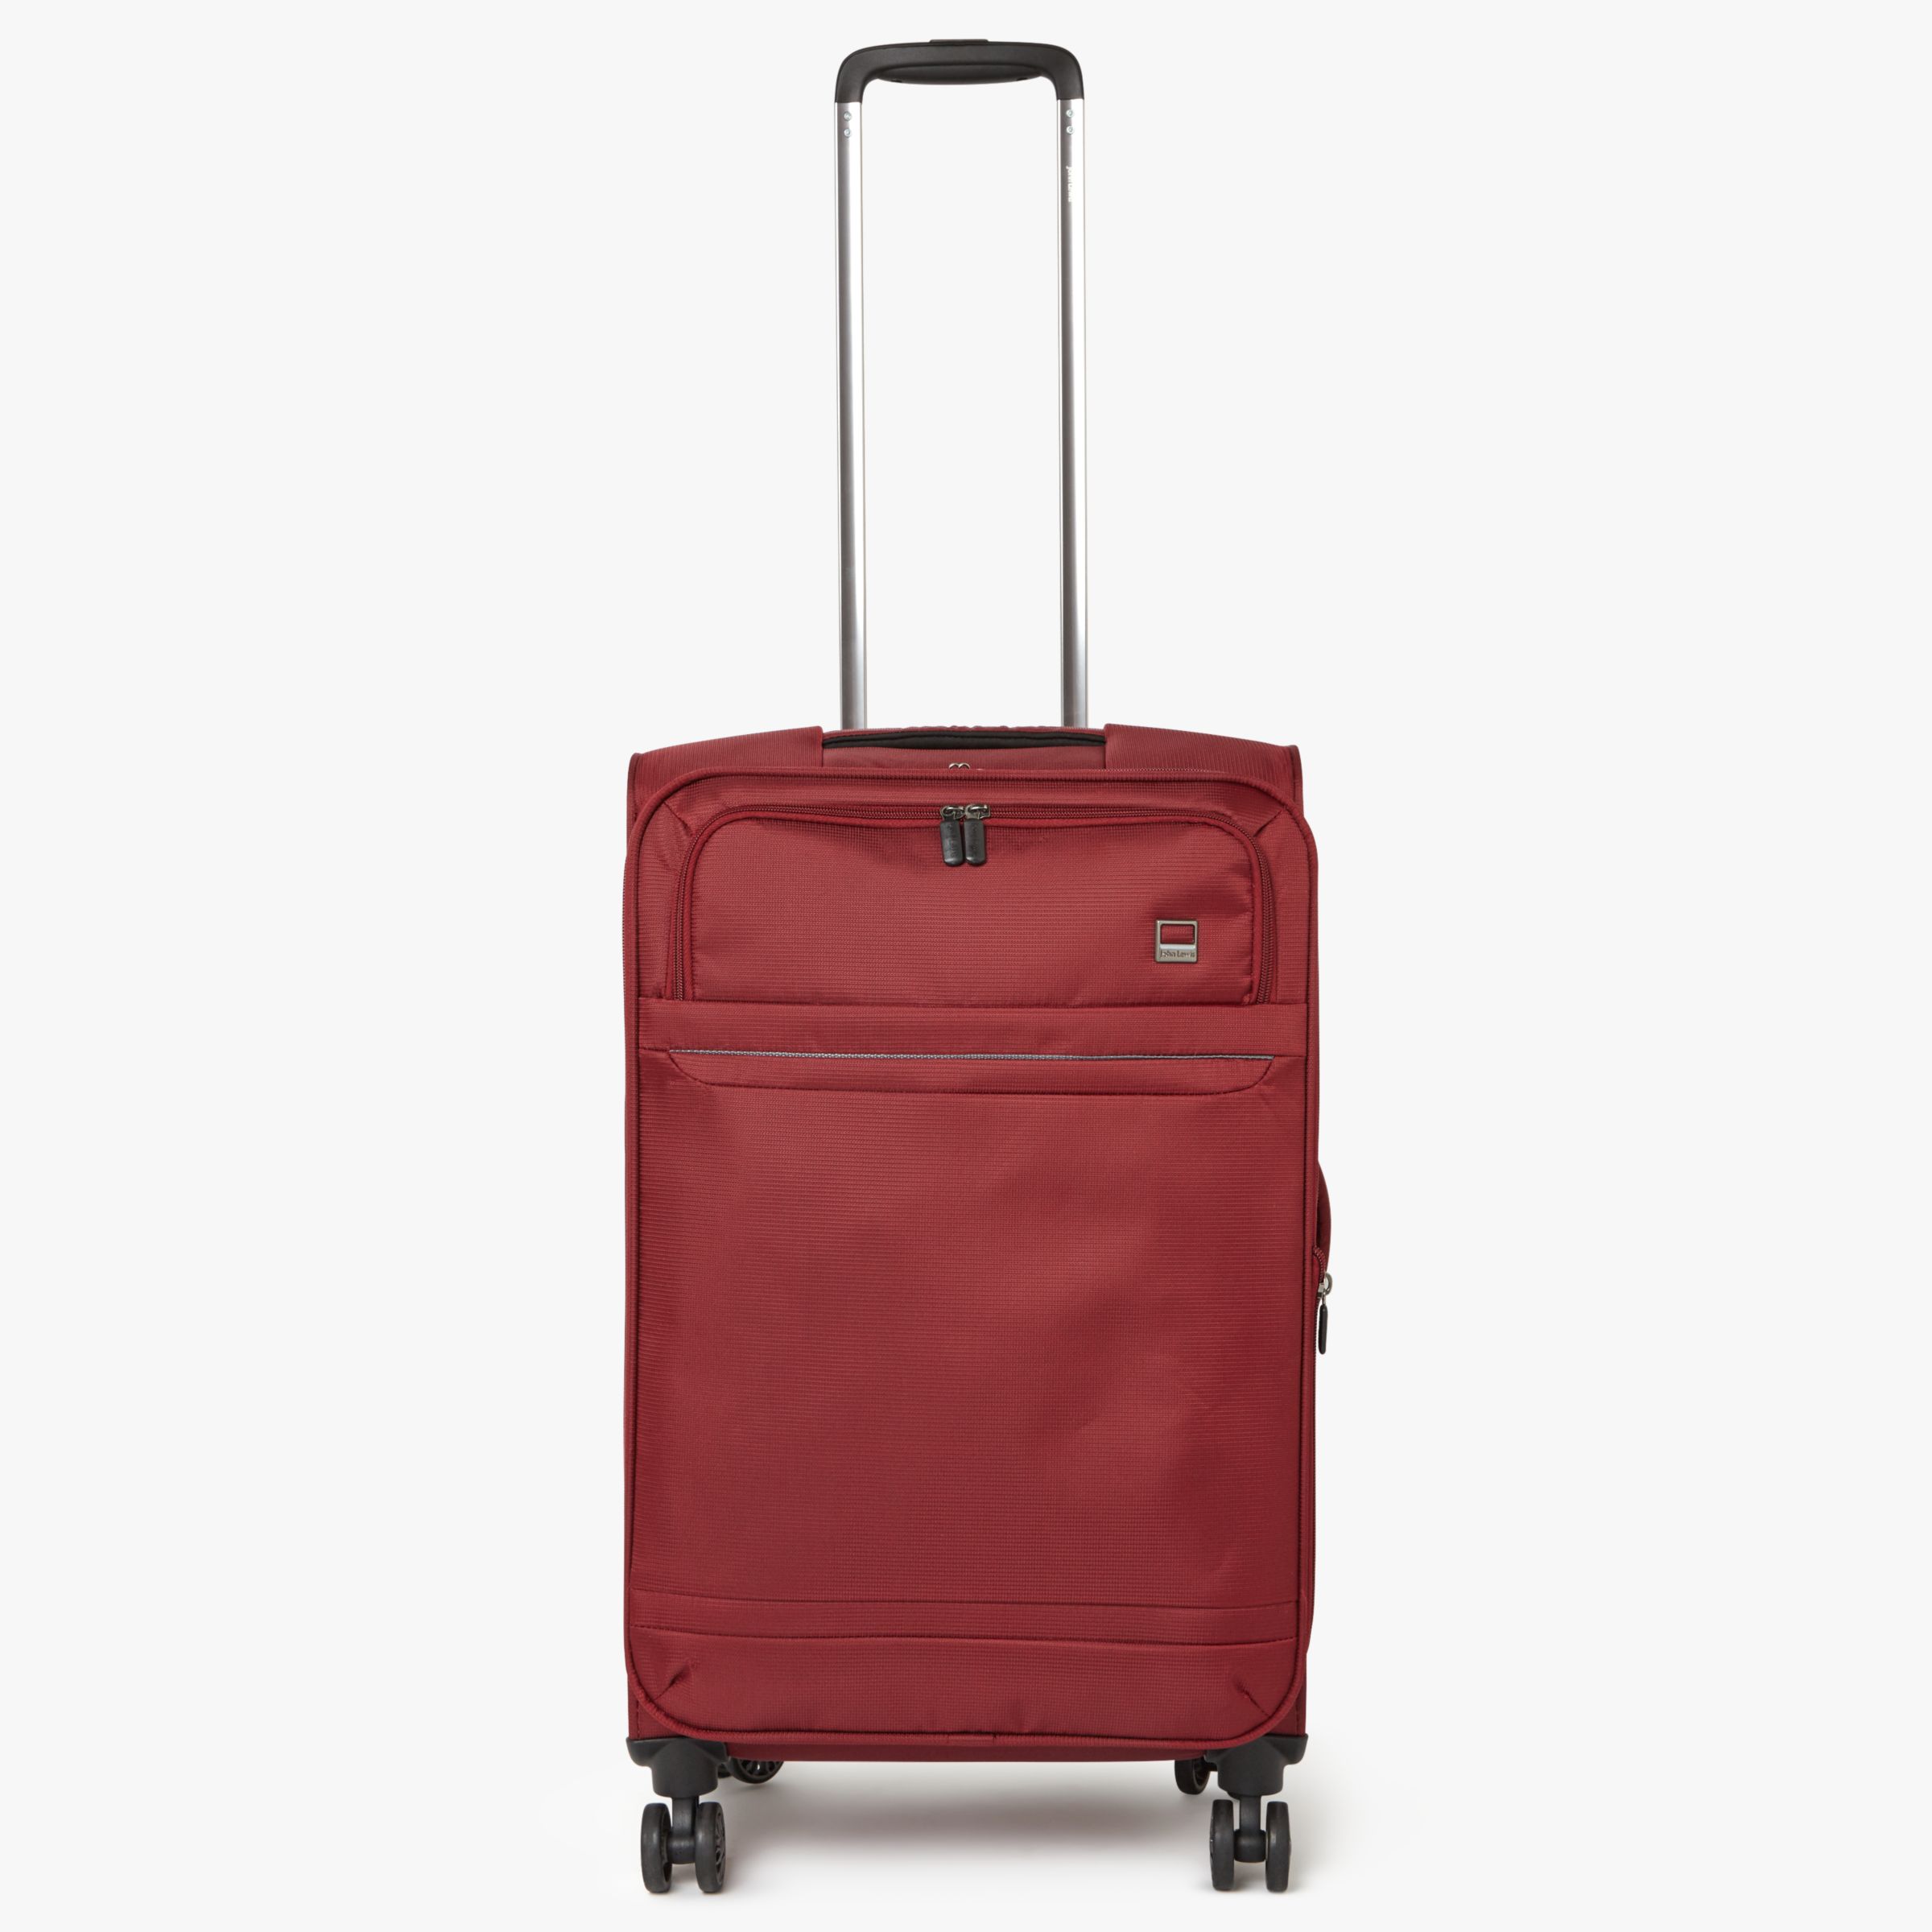 John Lewis & Partners X'Air III 66cm 4-Wheel Suitcase, Merlot at John Lewis & Partners